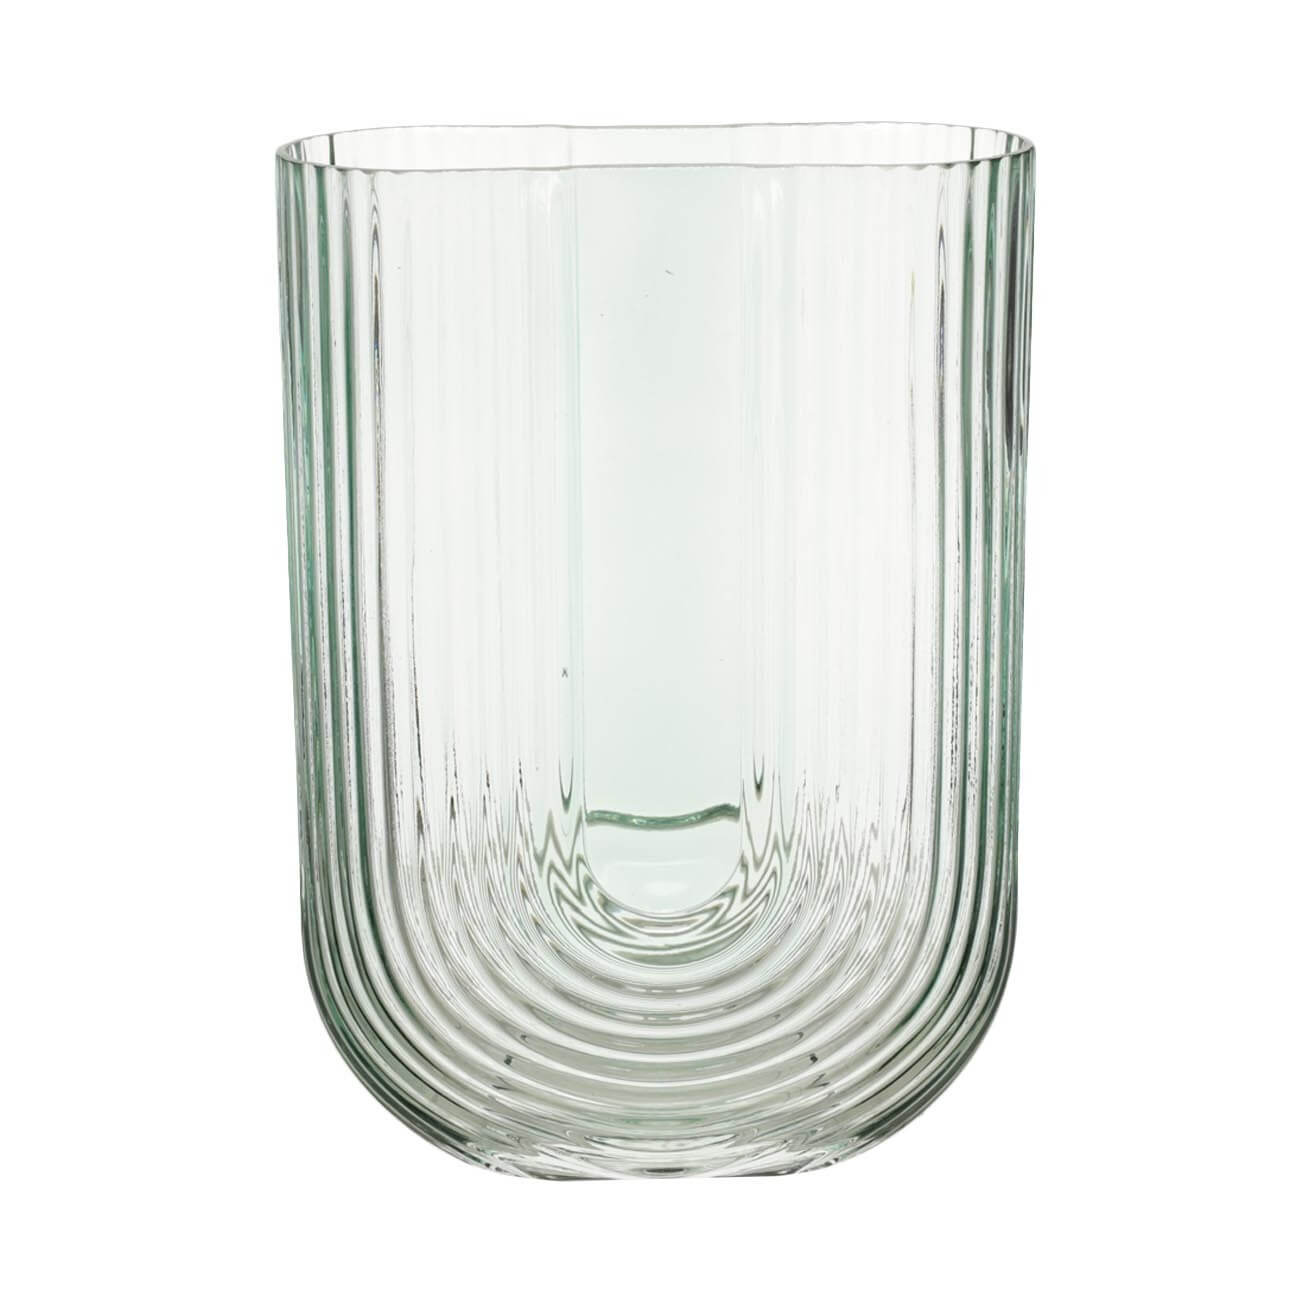 ваза margaret стекло прозрачно зеленая 19 см Ваза для цветов, 23 см, стекло, зеленая, Арка, Arch